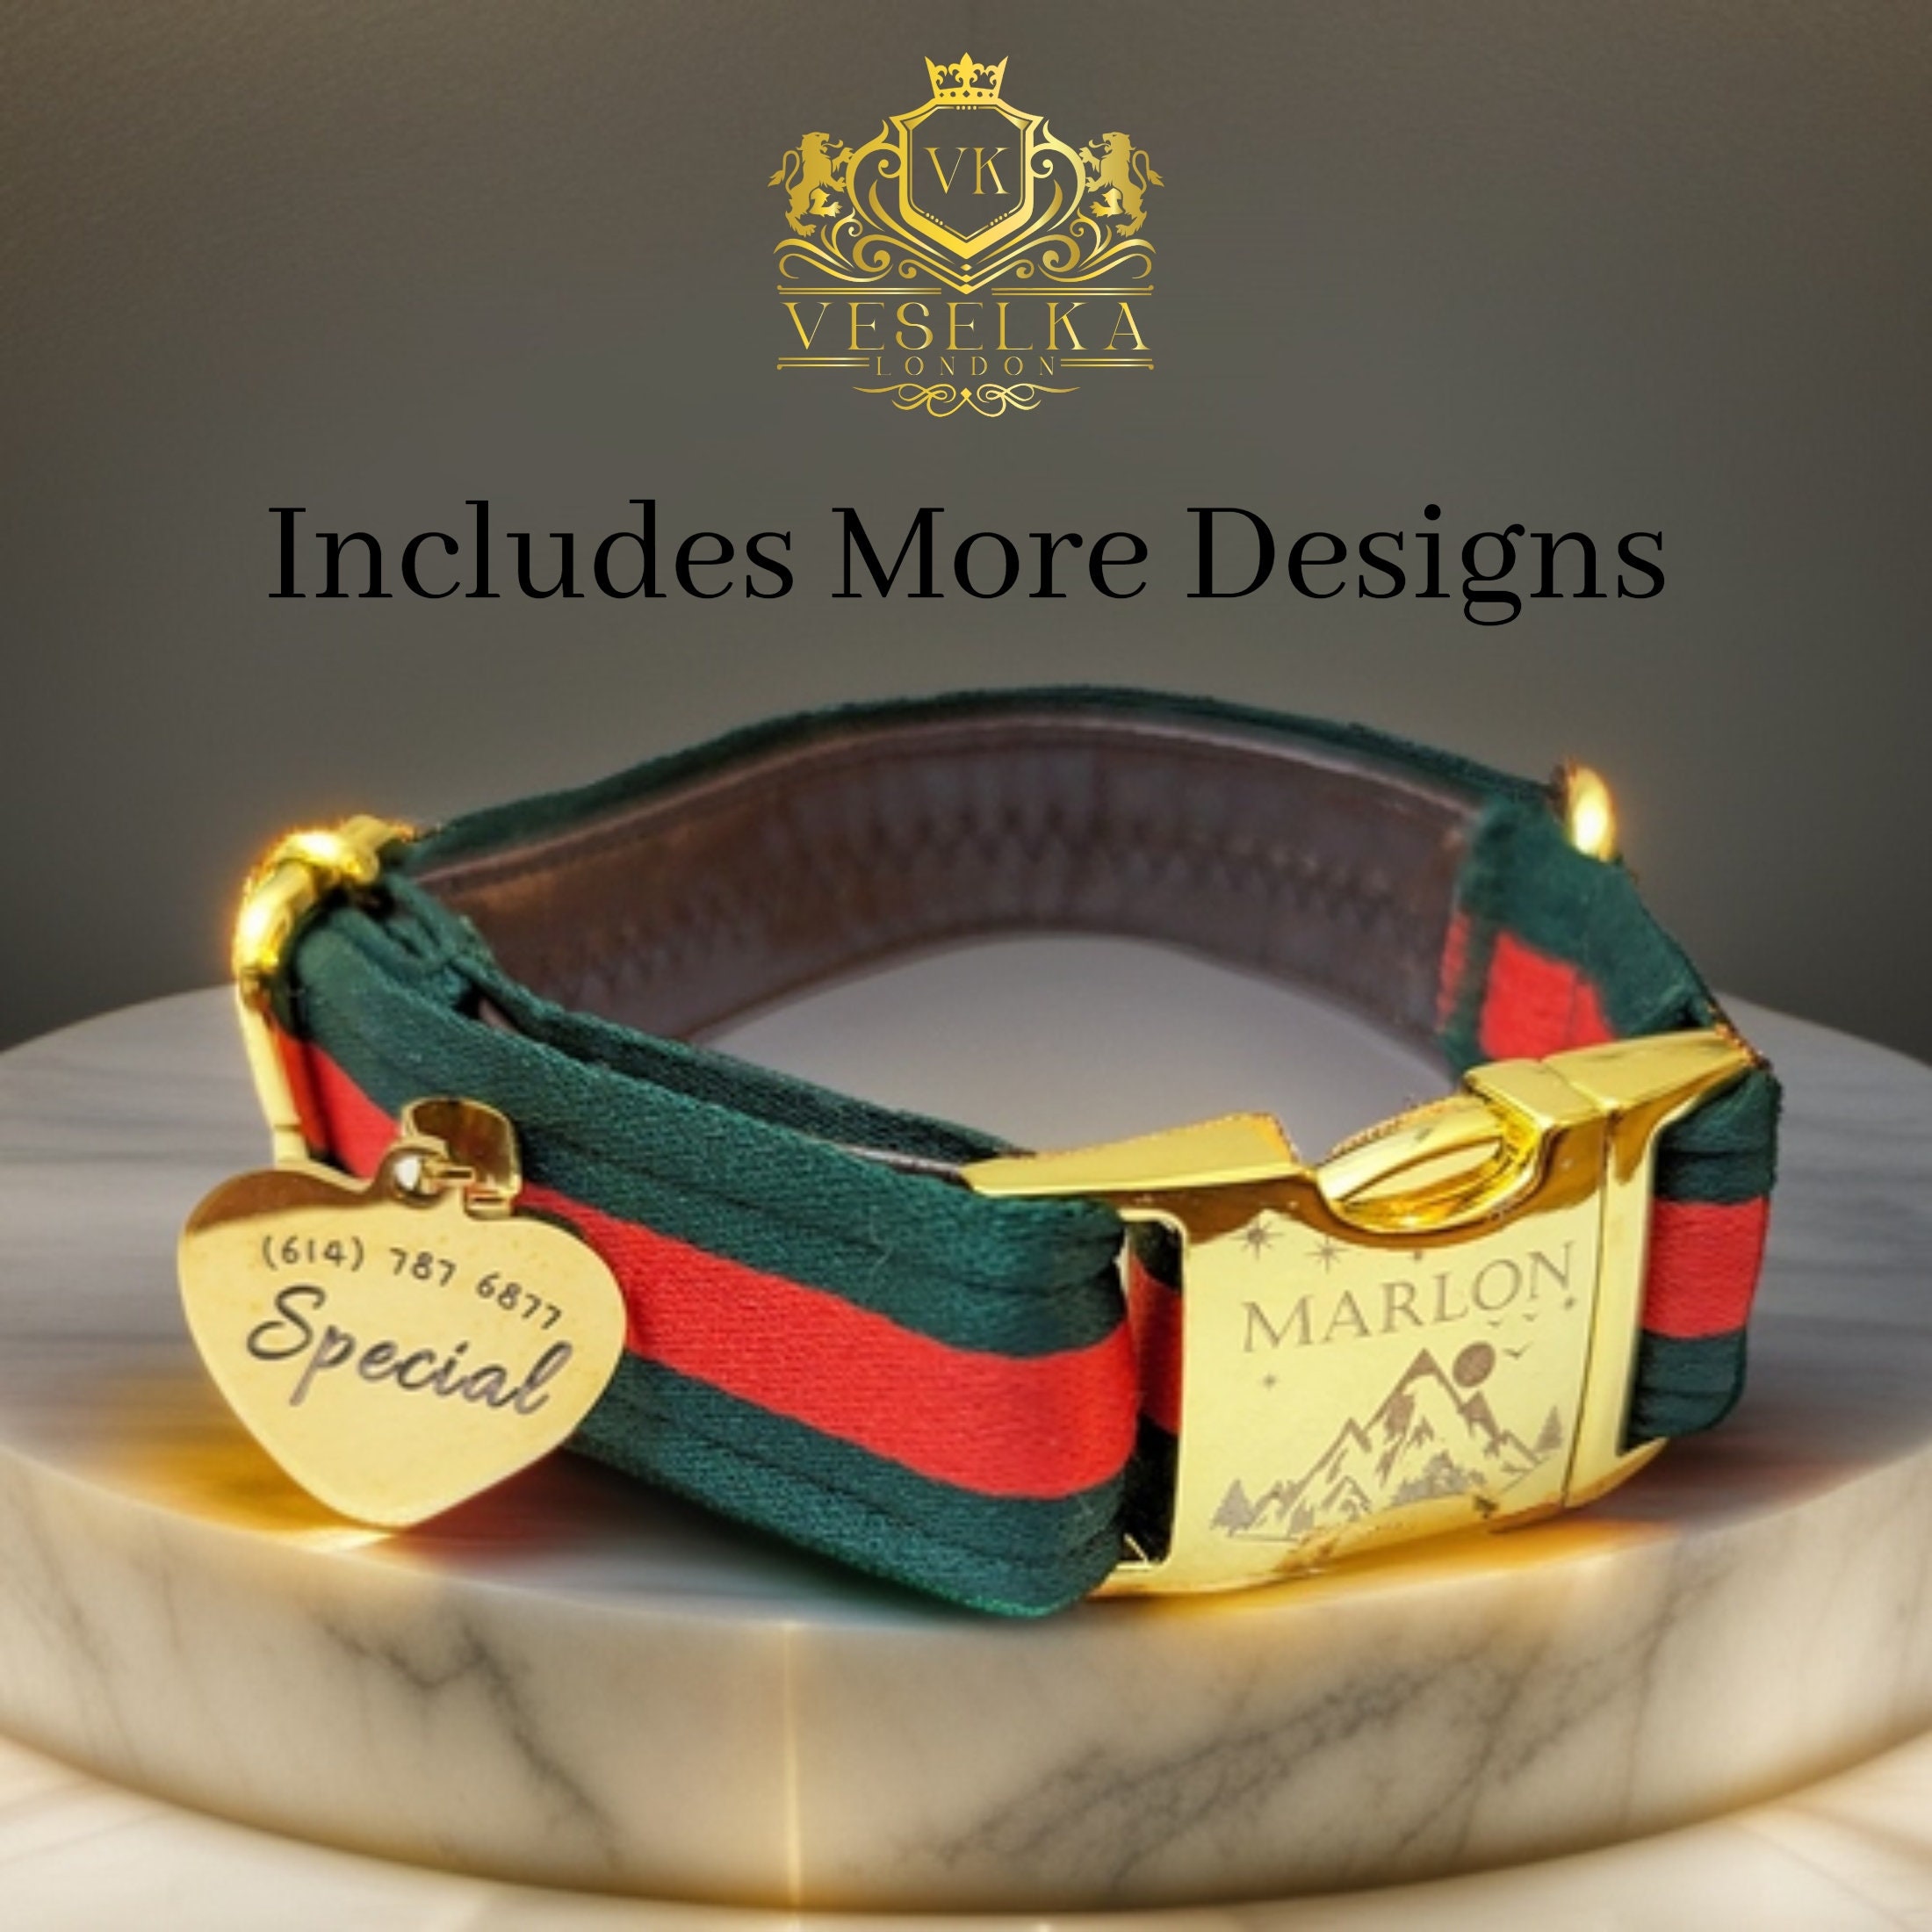 Gucci Dog Collar and Leash - Royal Dog Collars - Handmade, Premium,  Designer Inspired